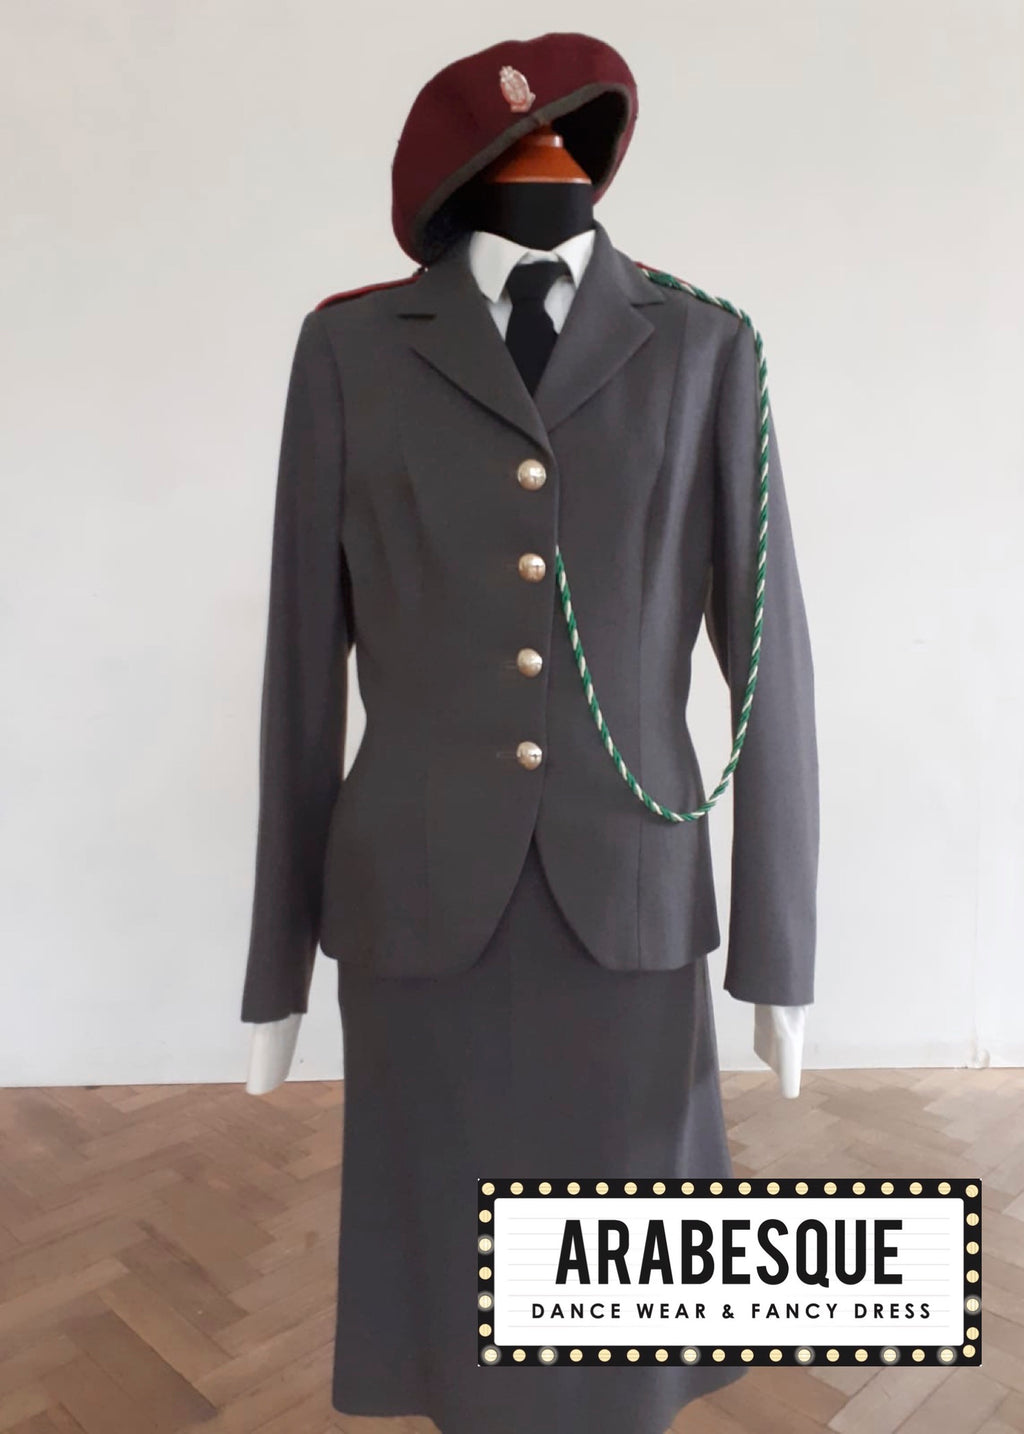 Ladies ATS Uniform (Auxiliary Territorial Service)